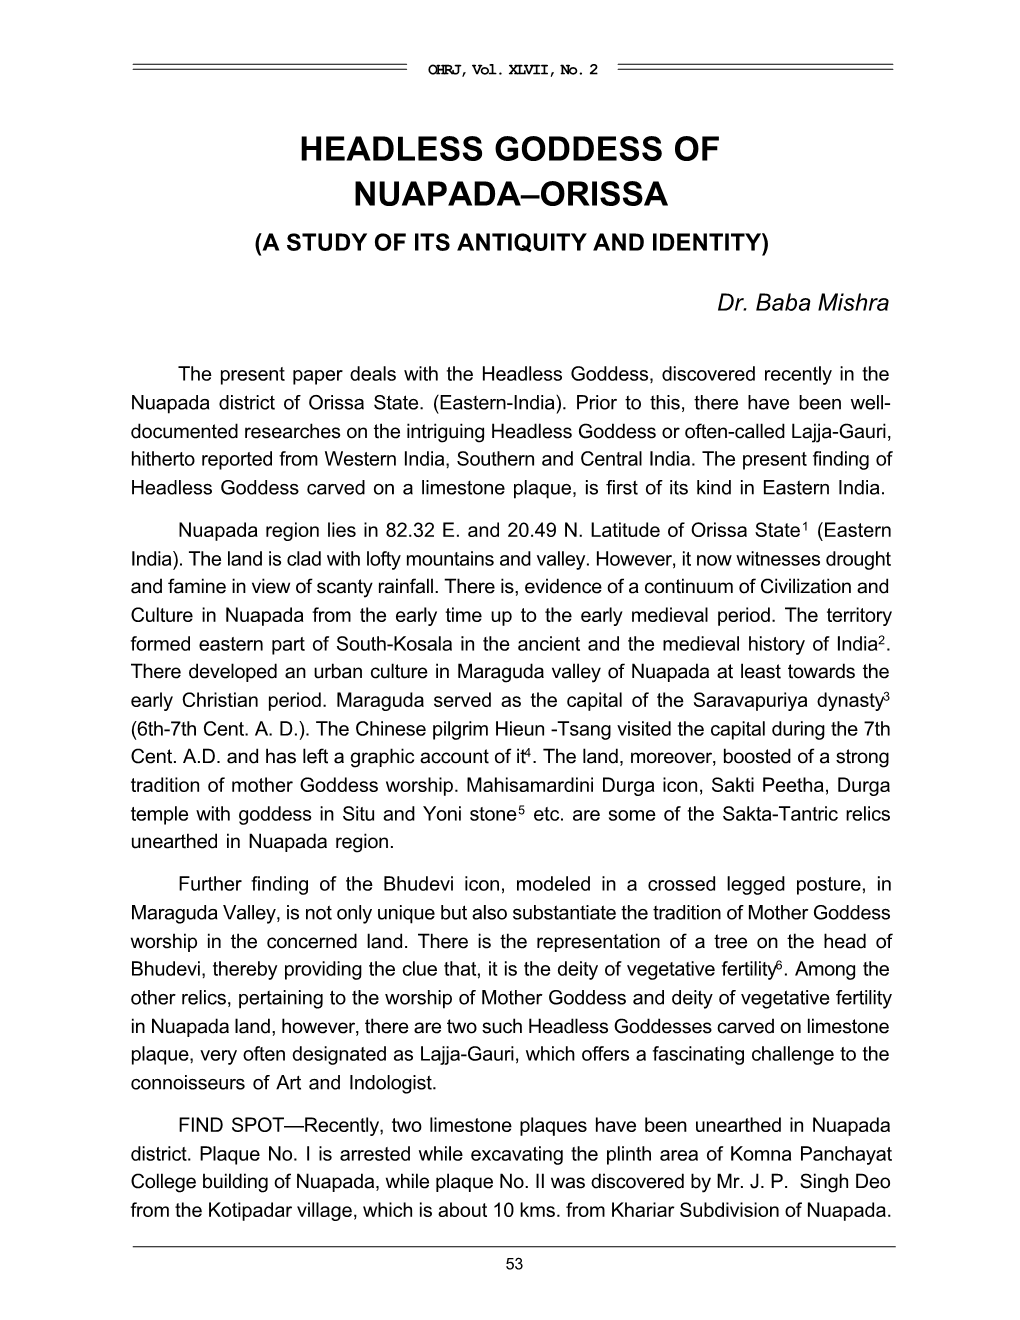 Headless Goddess of Nuapada–Orissa (A Study of Its Antiquity and Identity)